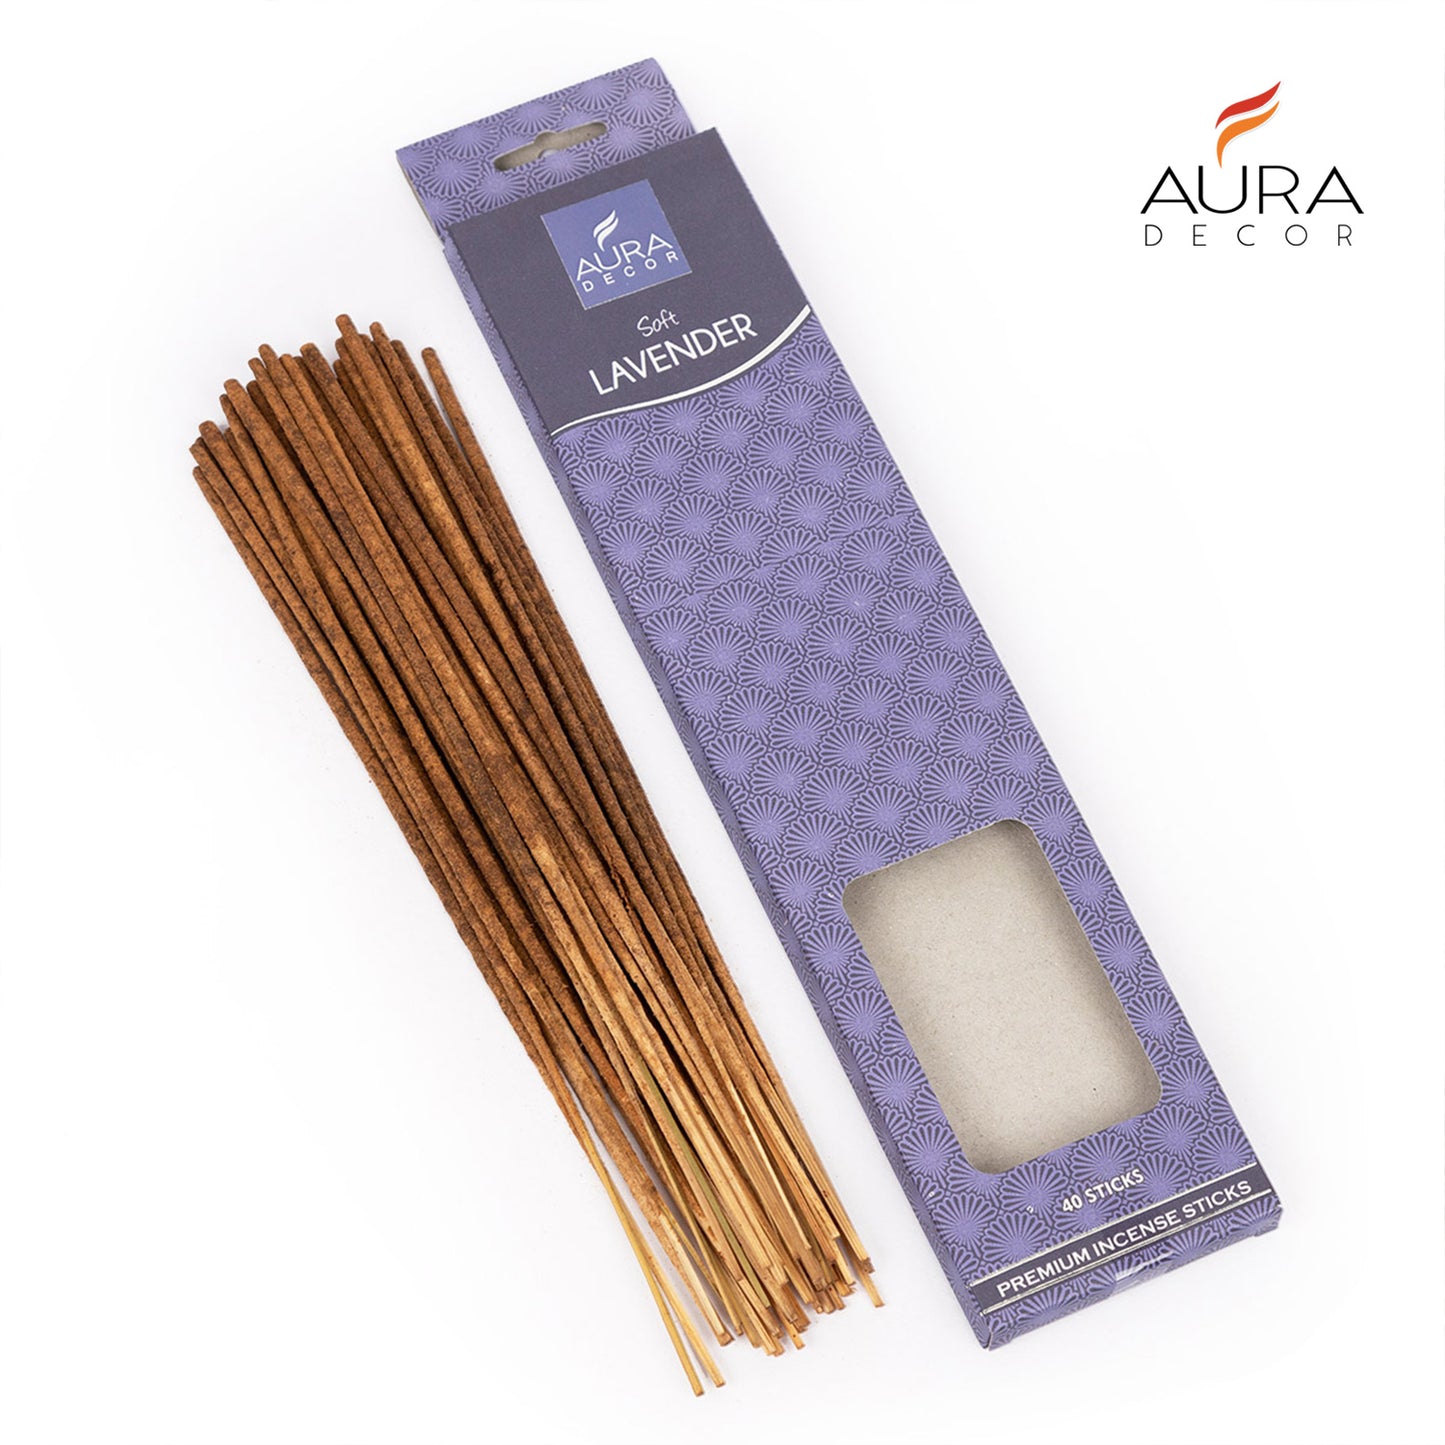 Soft Lavender Aroma Incense Sticks ( 40 Sticks )